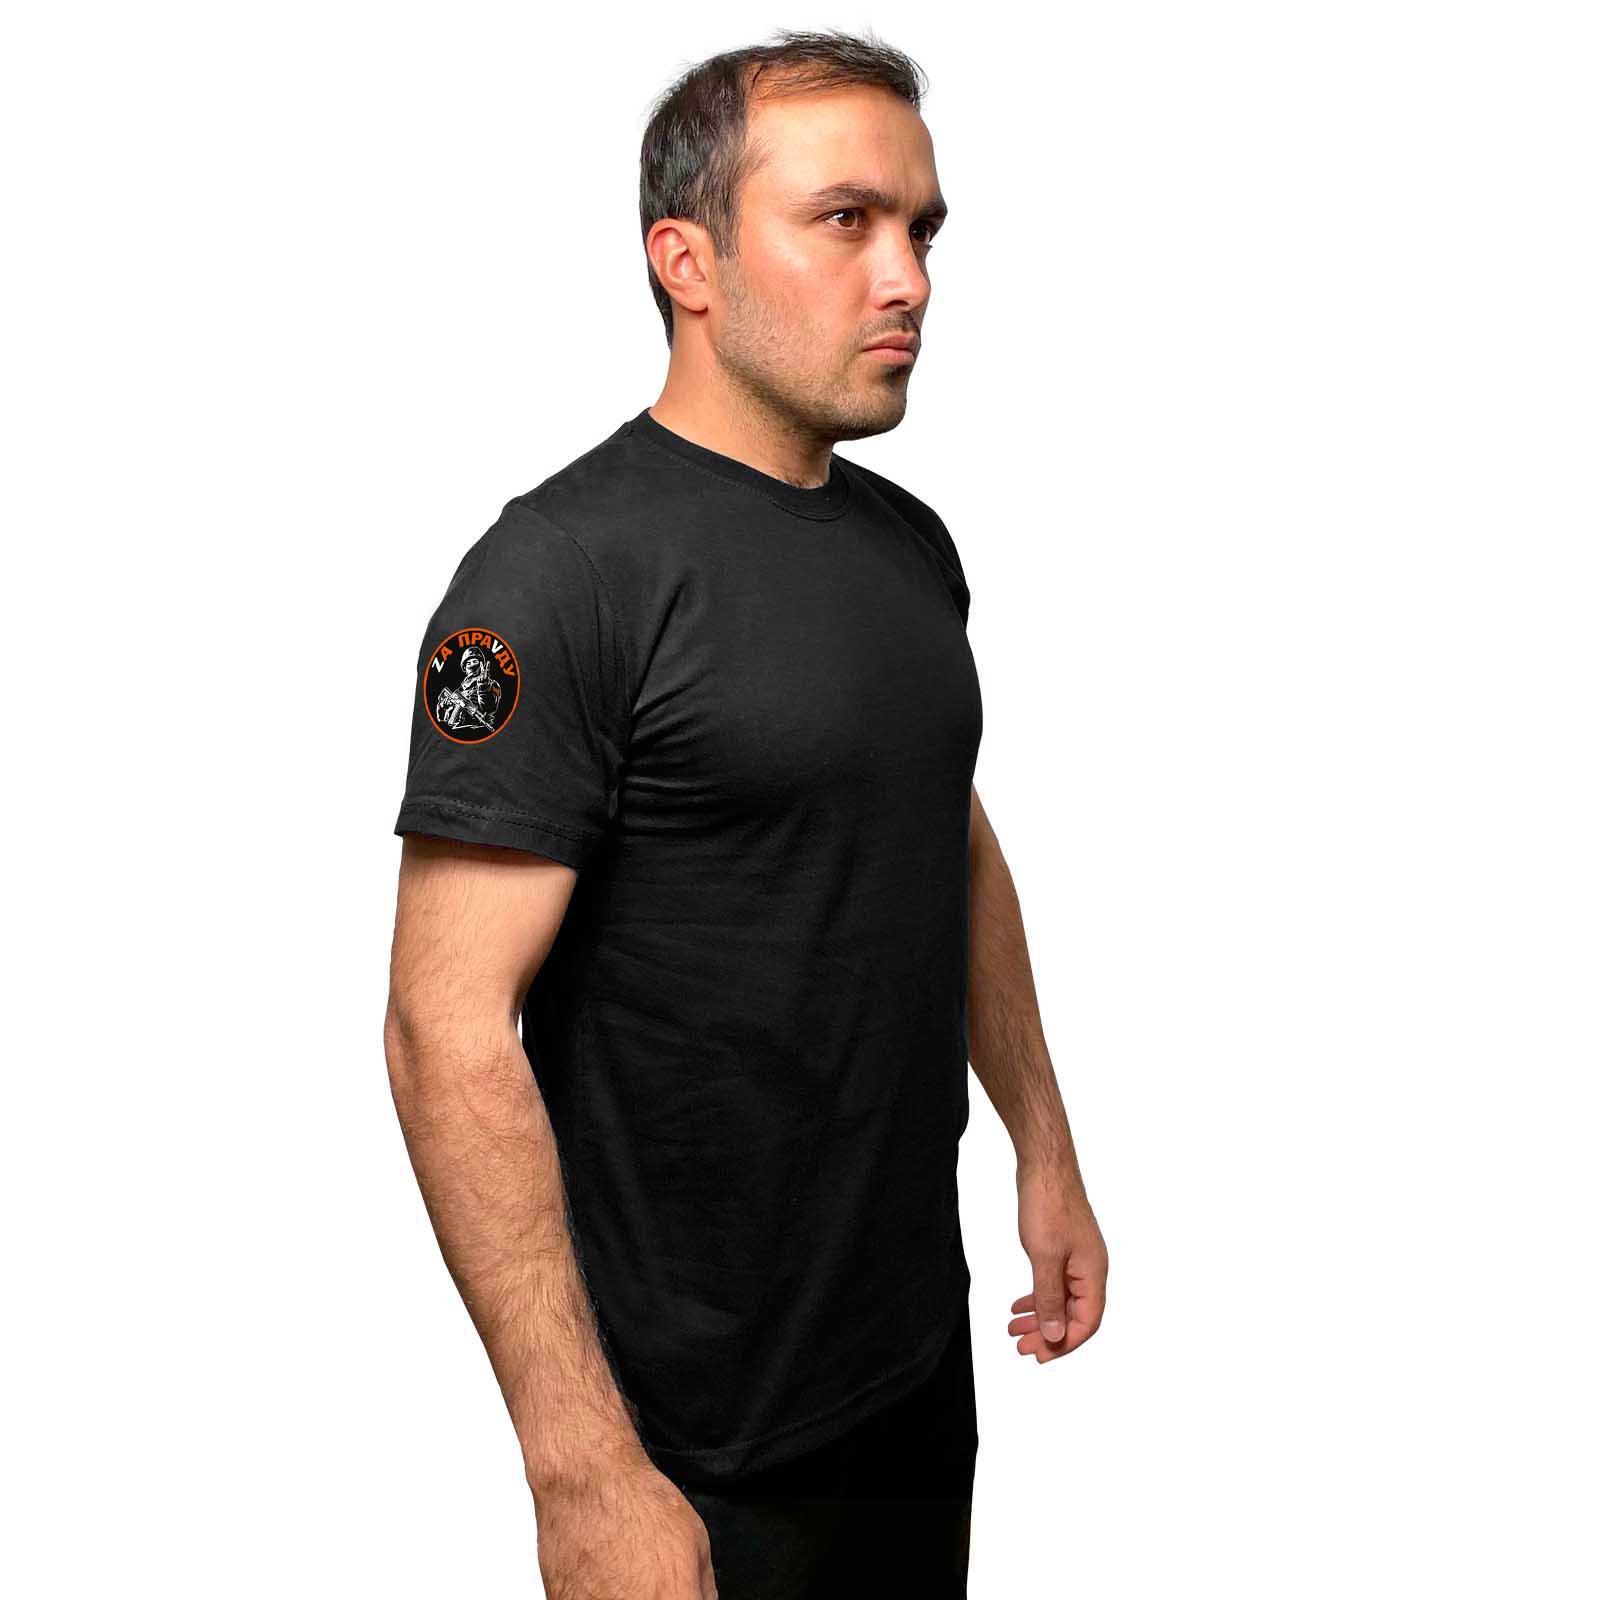 Чёрная футболка с термопереводкой "Zа праVду" на рукаве